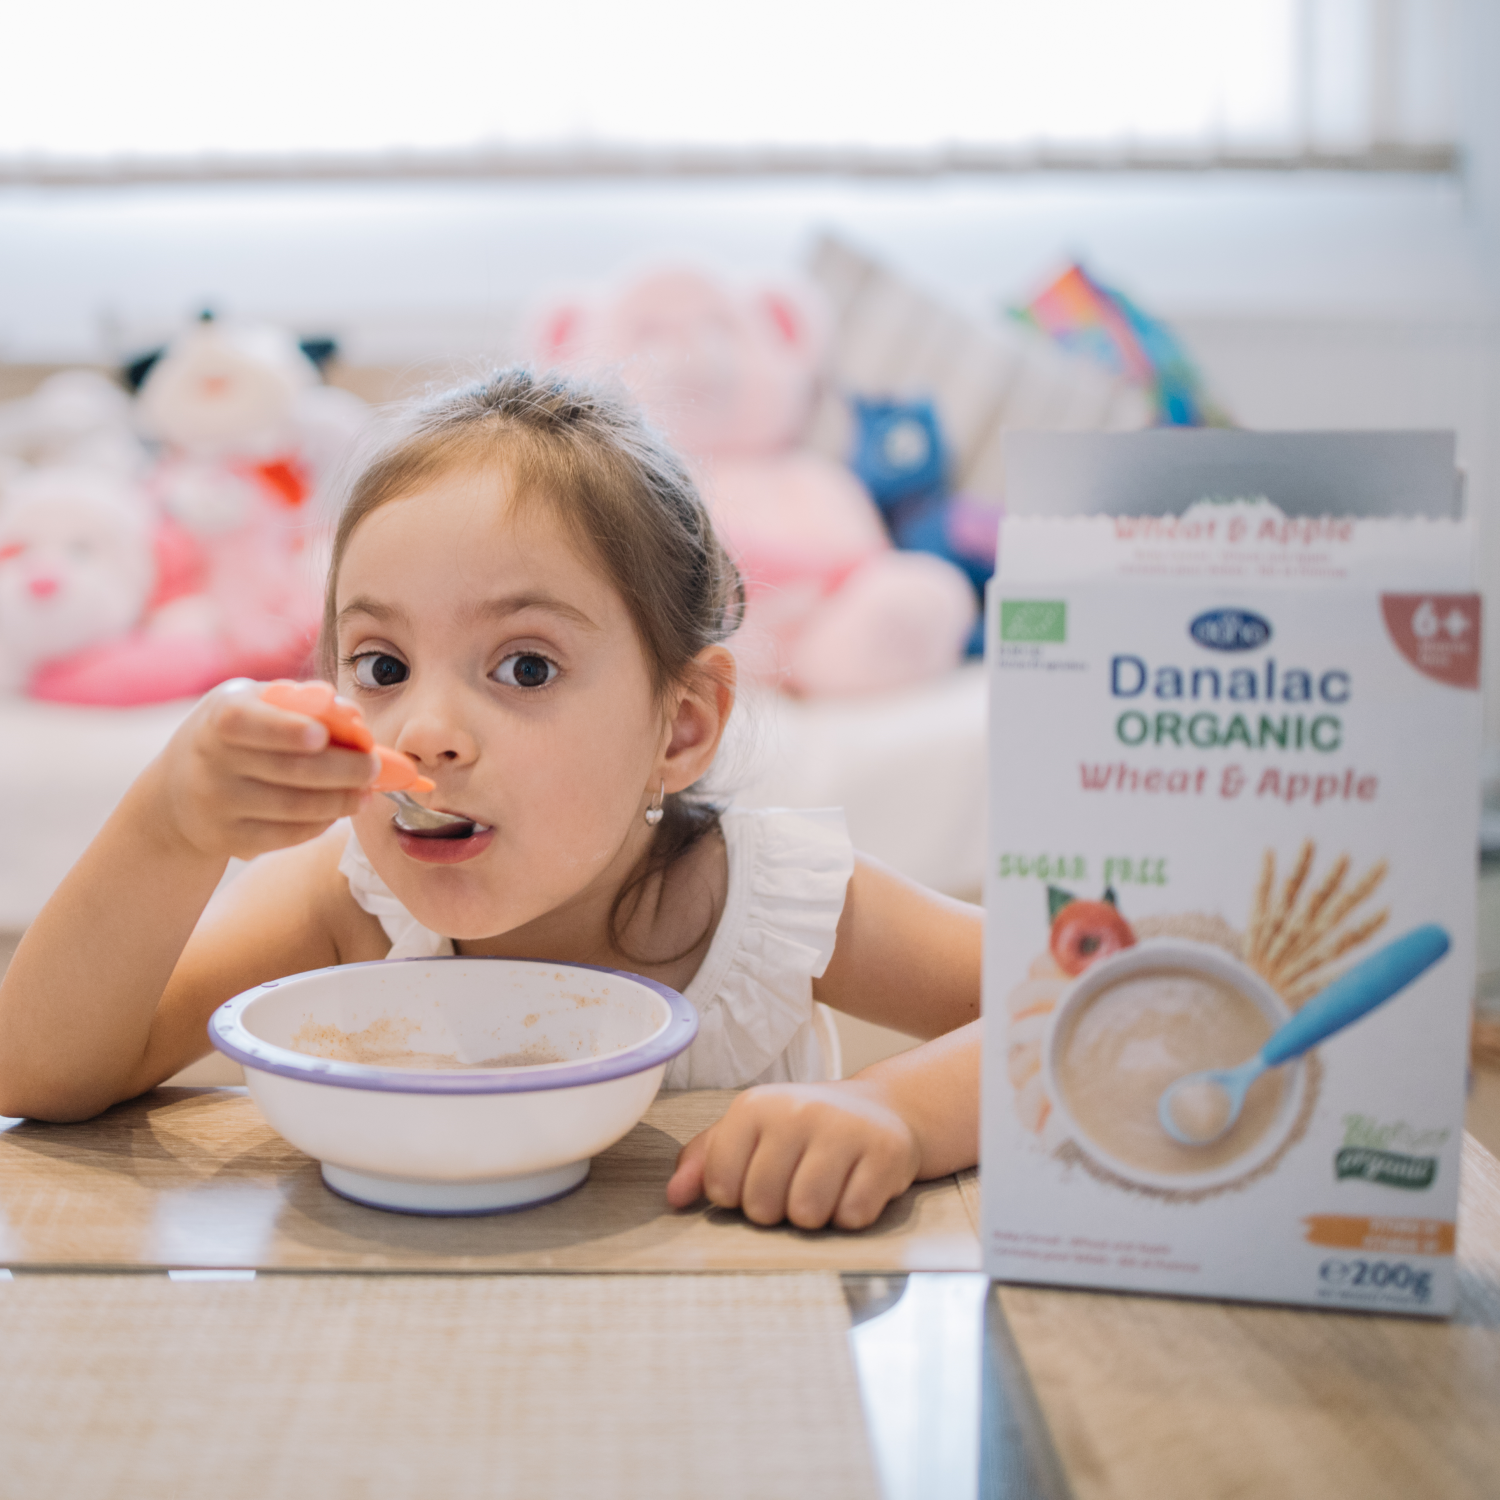 DANALAC Organic Baby Cereals